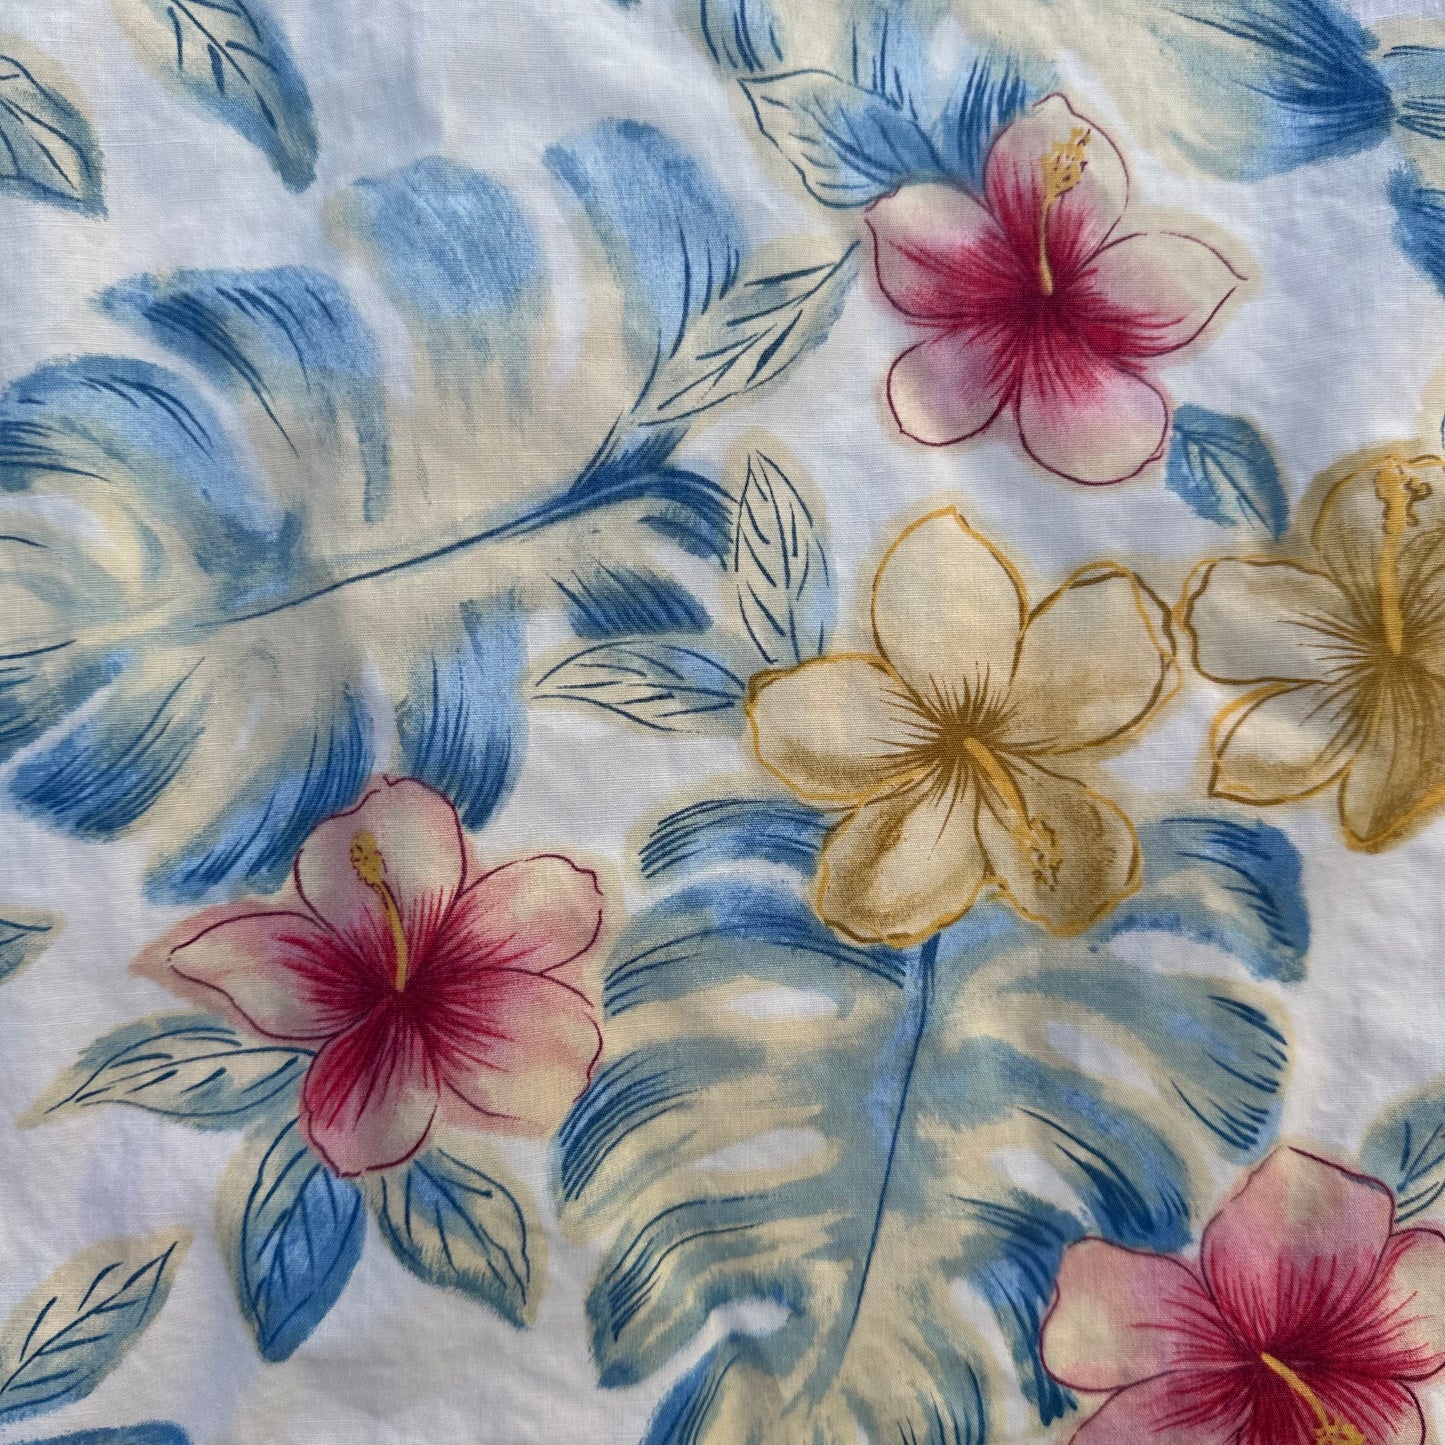 Vintage Reyn Spooner Floral Hawaiian Button Down Short Sleeve Shirt - L